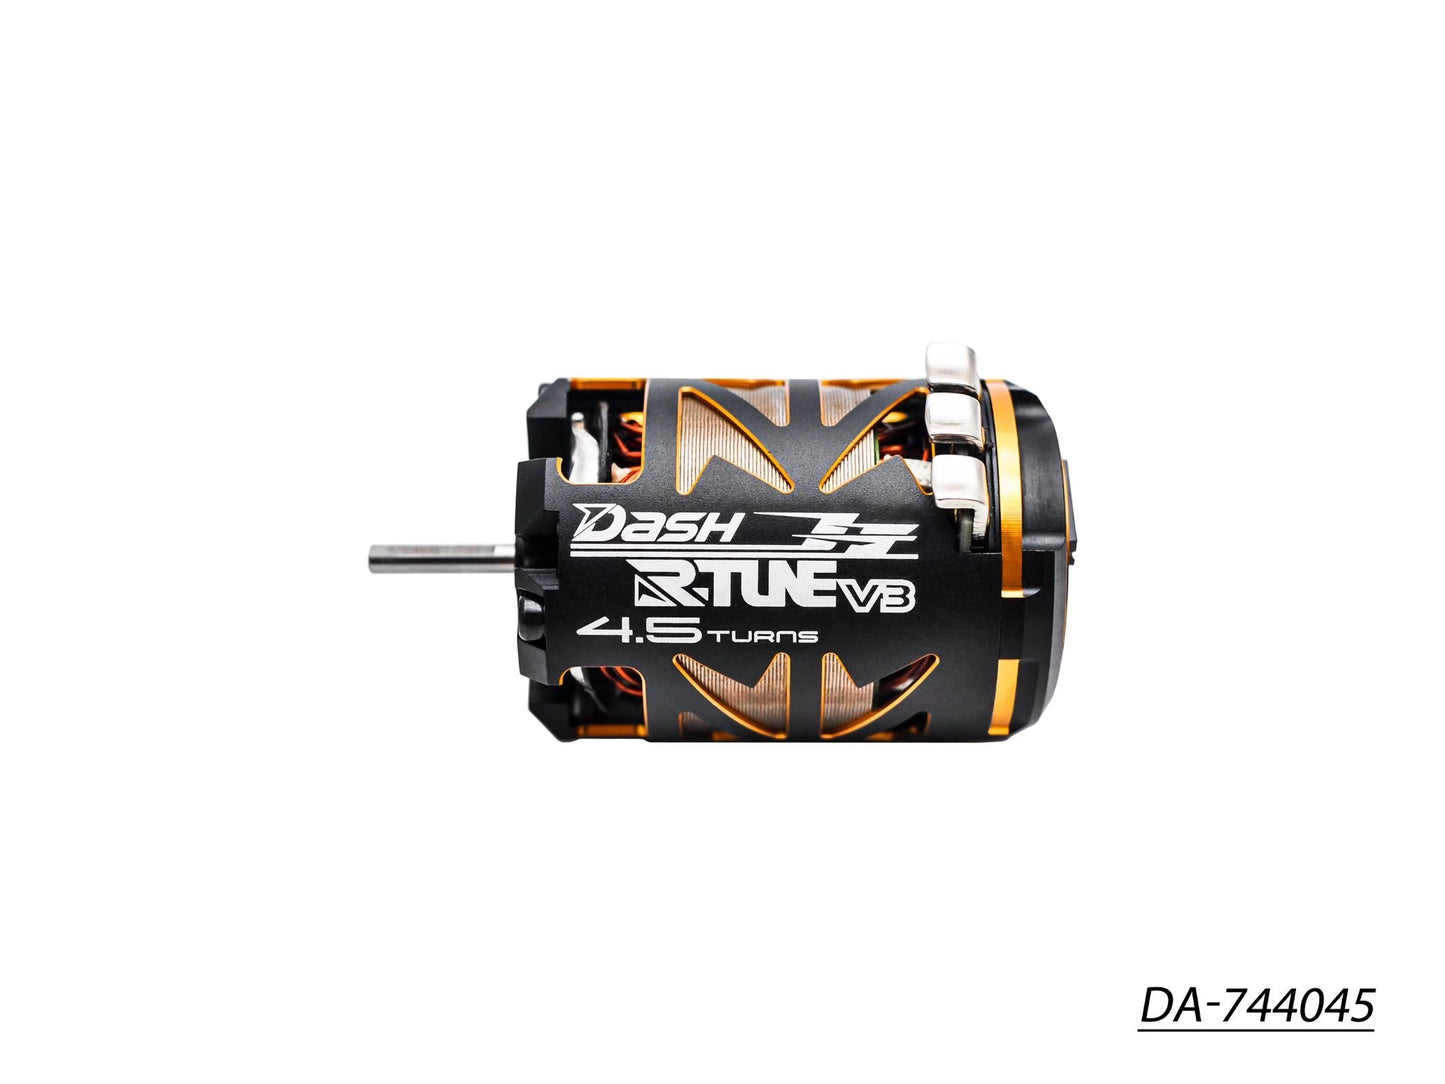 Dash R-Tune V3 (Modified type) 540 Sensored Brushless Motor 4.5T DA-744045